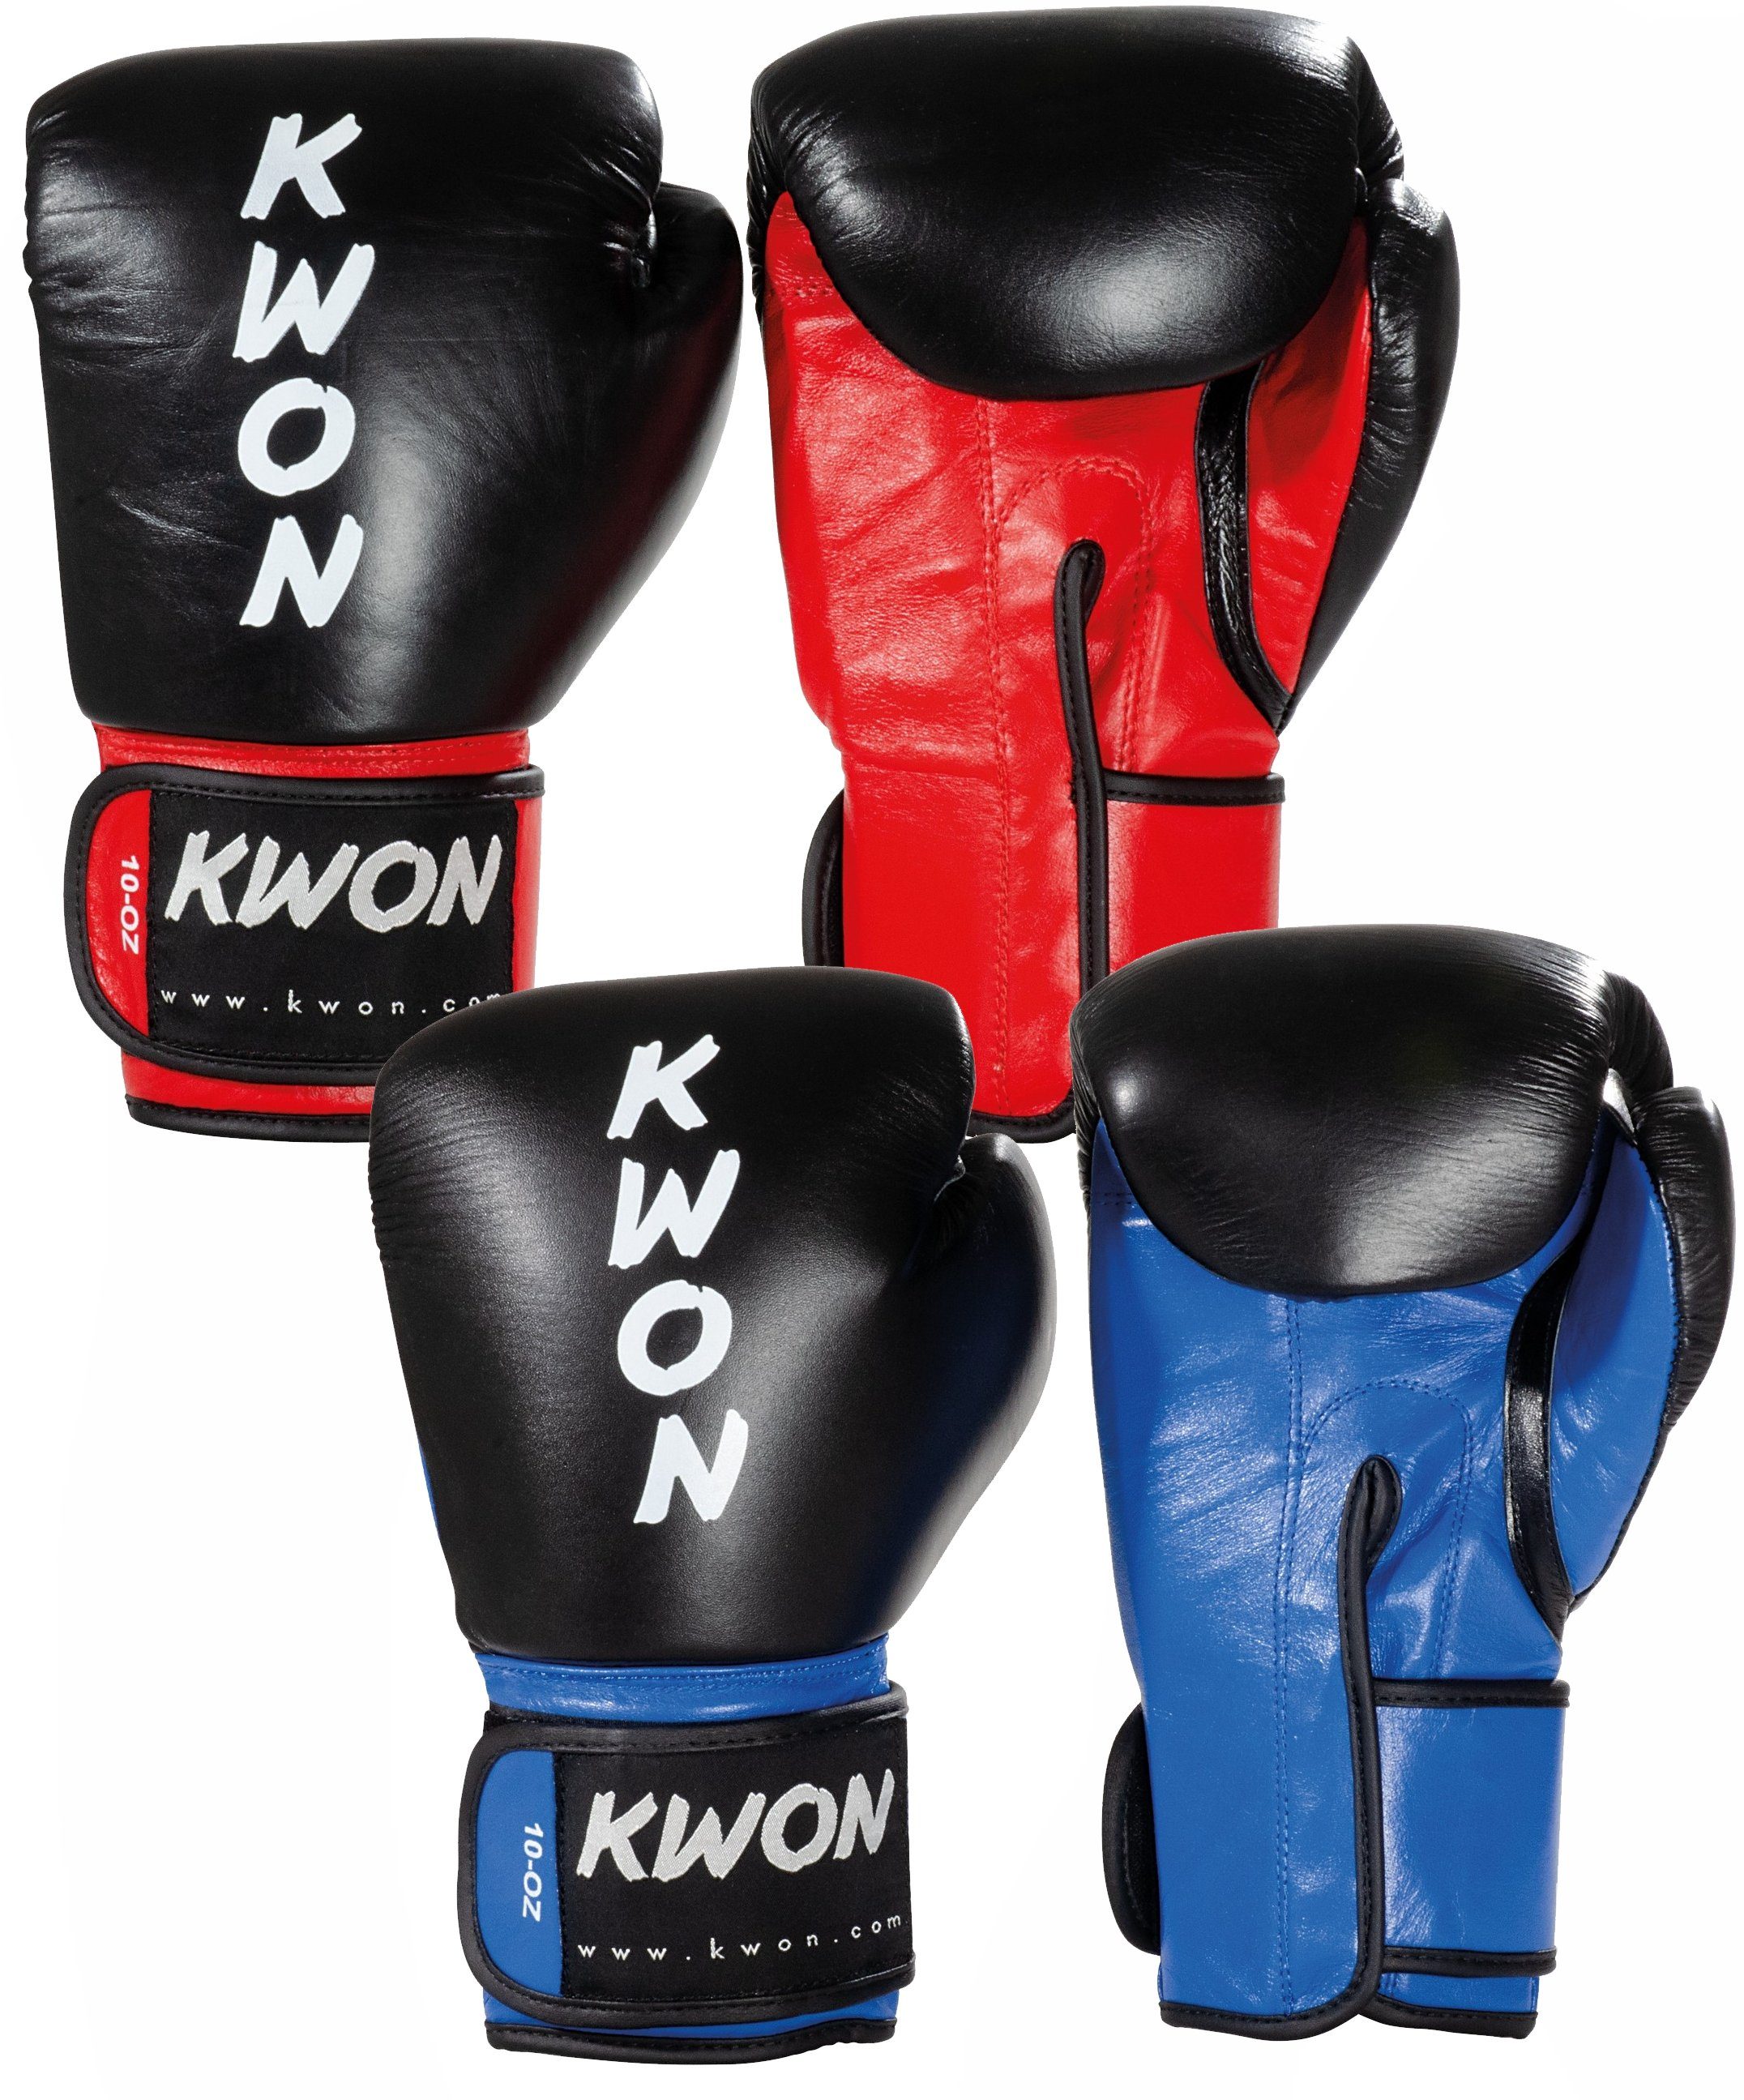 KWON Boxhandschuhe Form, schwarz/rot anerkannt Echtes Ausführung, Boxen Kickboxen Thaiboxen Leder Ergo Profi Champ Leder, (Vollkontakt, Profi KO Paar), WKU Box-Handschuhe